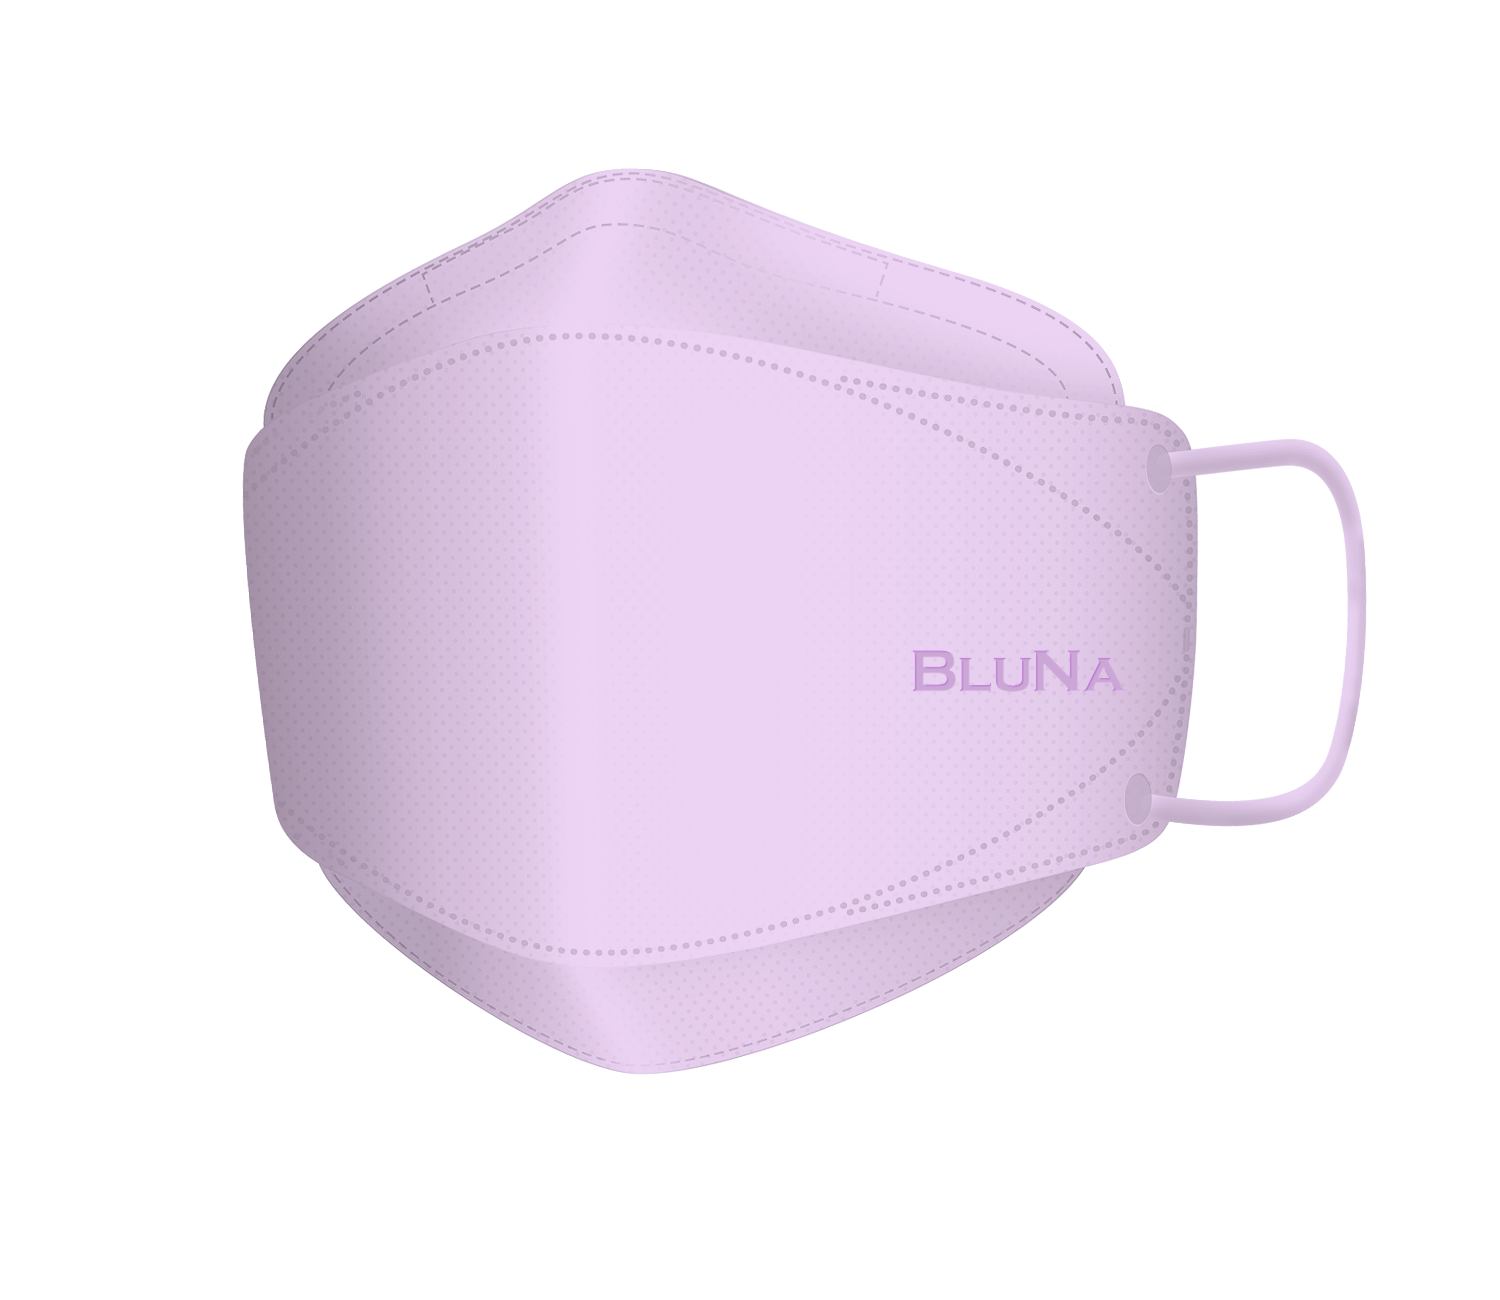 BLUNA 3D Adult Style Mask, Lilac Colour, BFE 99.9%